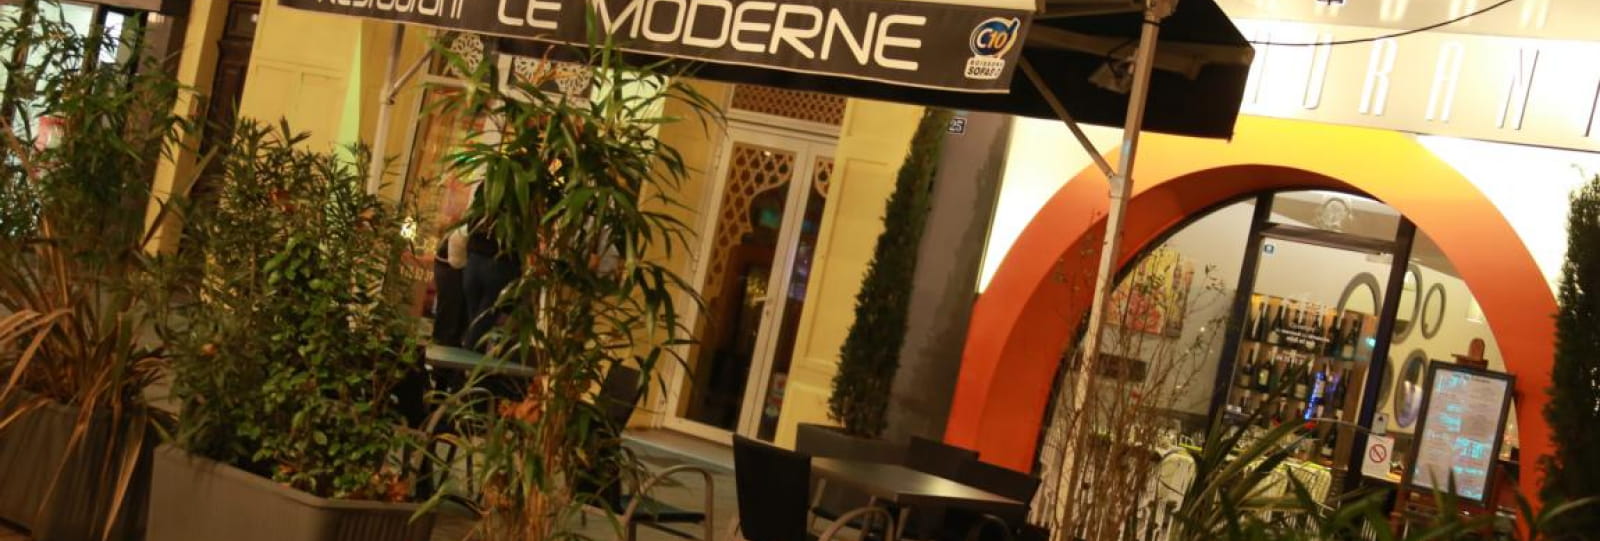 Restaurant Le Moderne